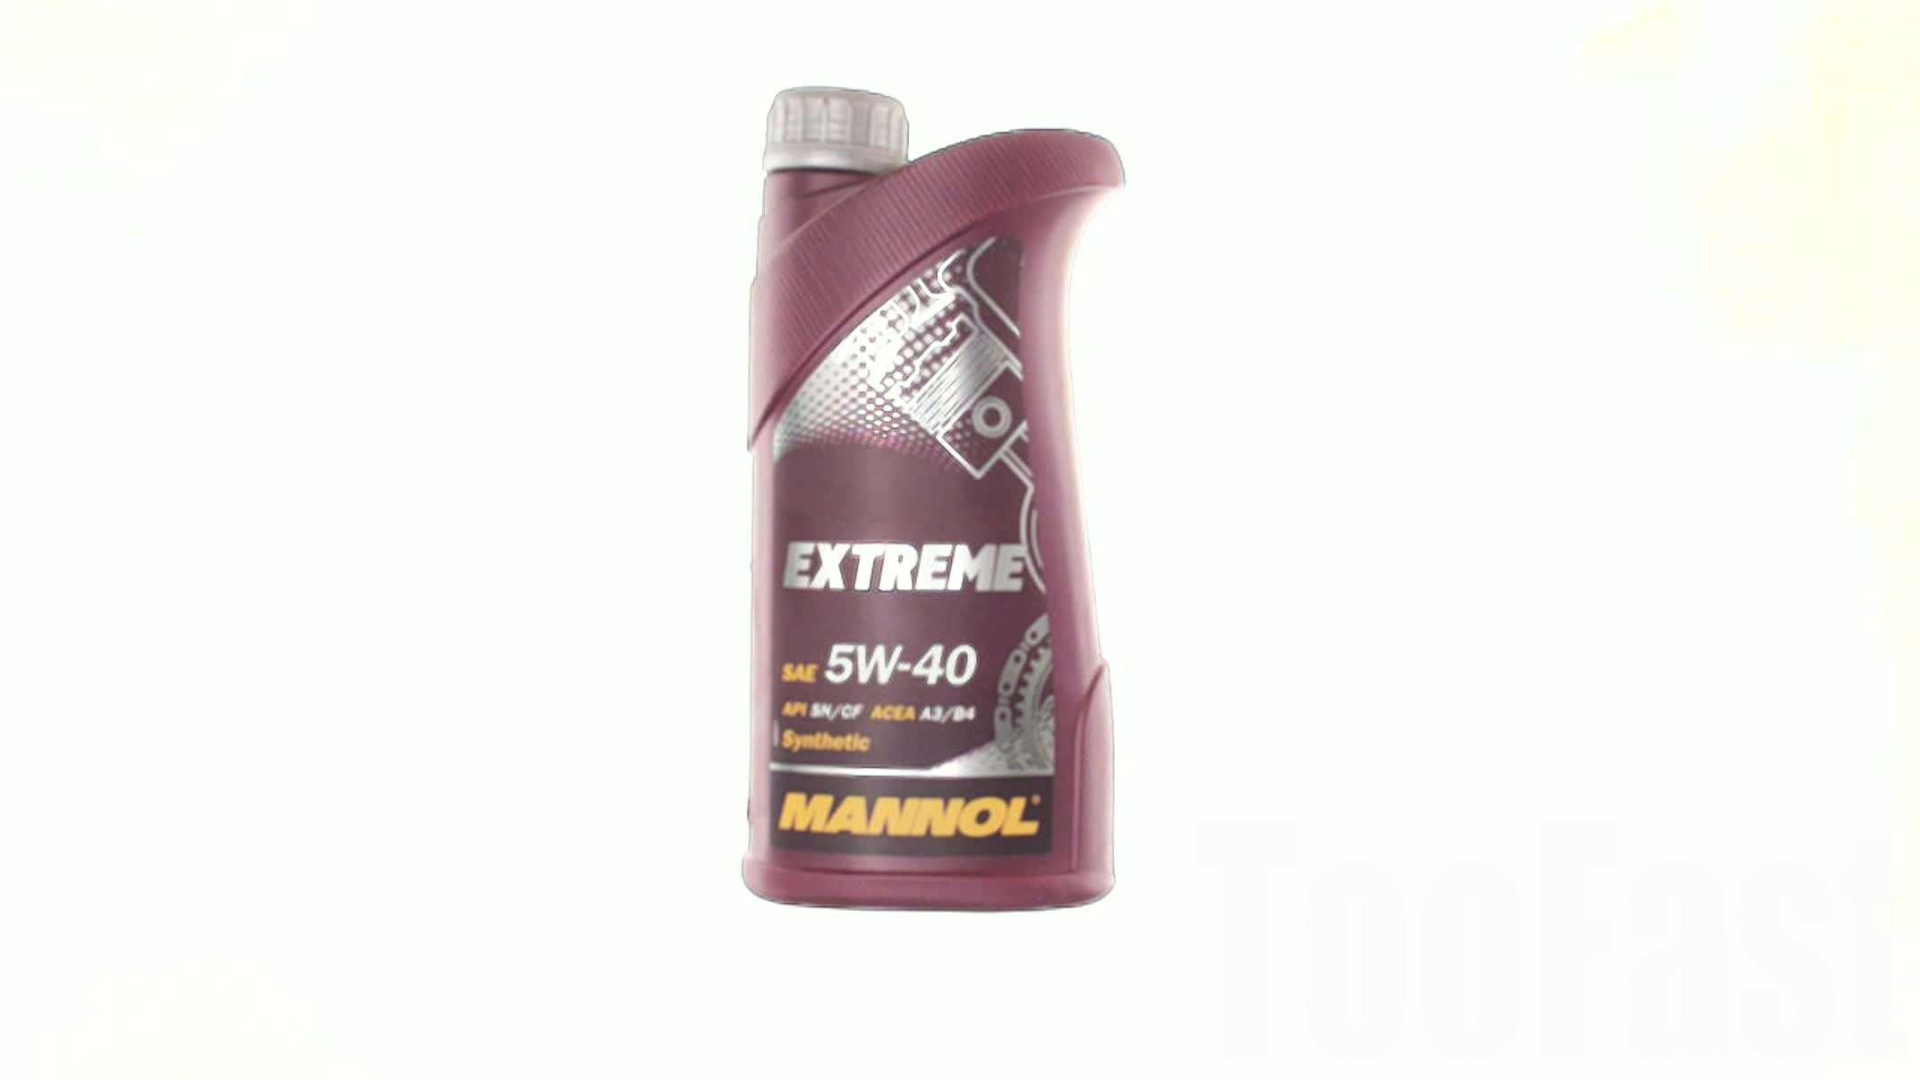 Масло   4T, 1л   (SAE 5W-40, синтетика, Extreme 5W-40 API SN/CF)   MANNOL